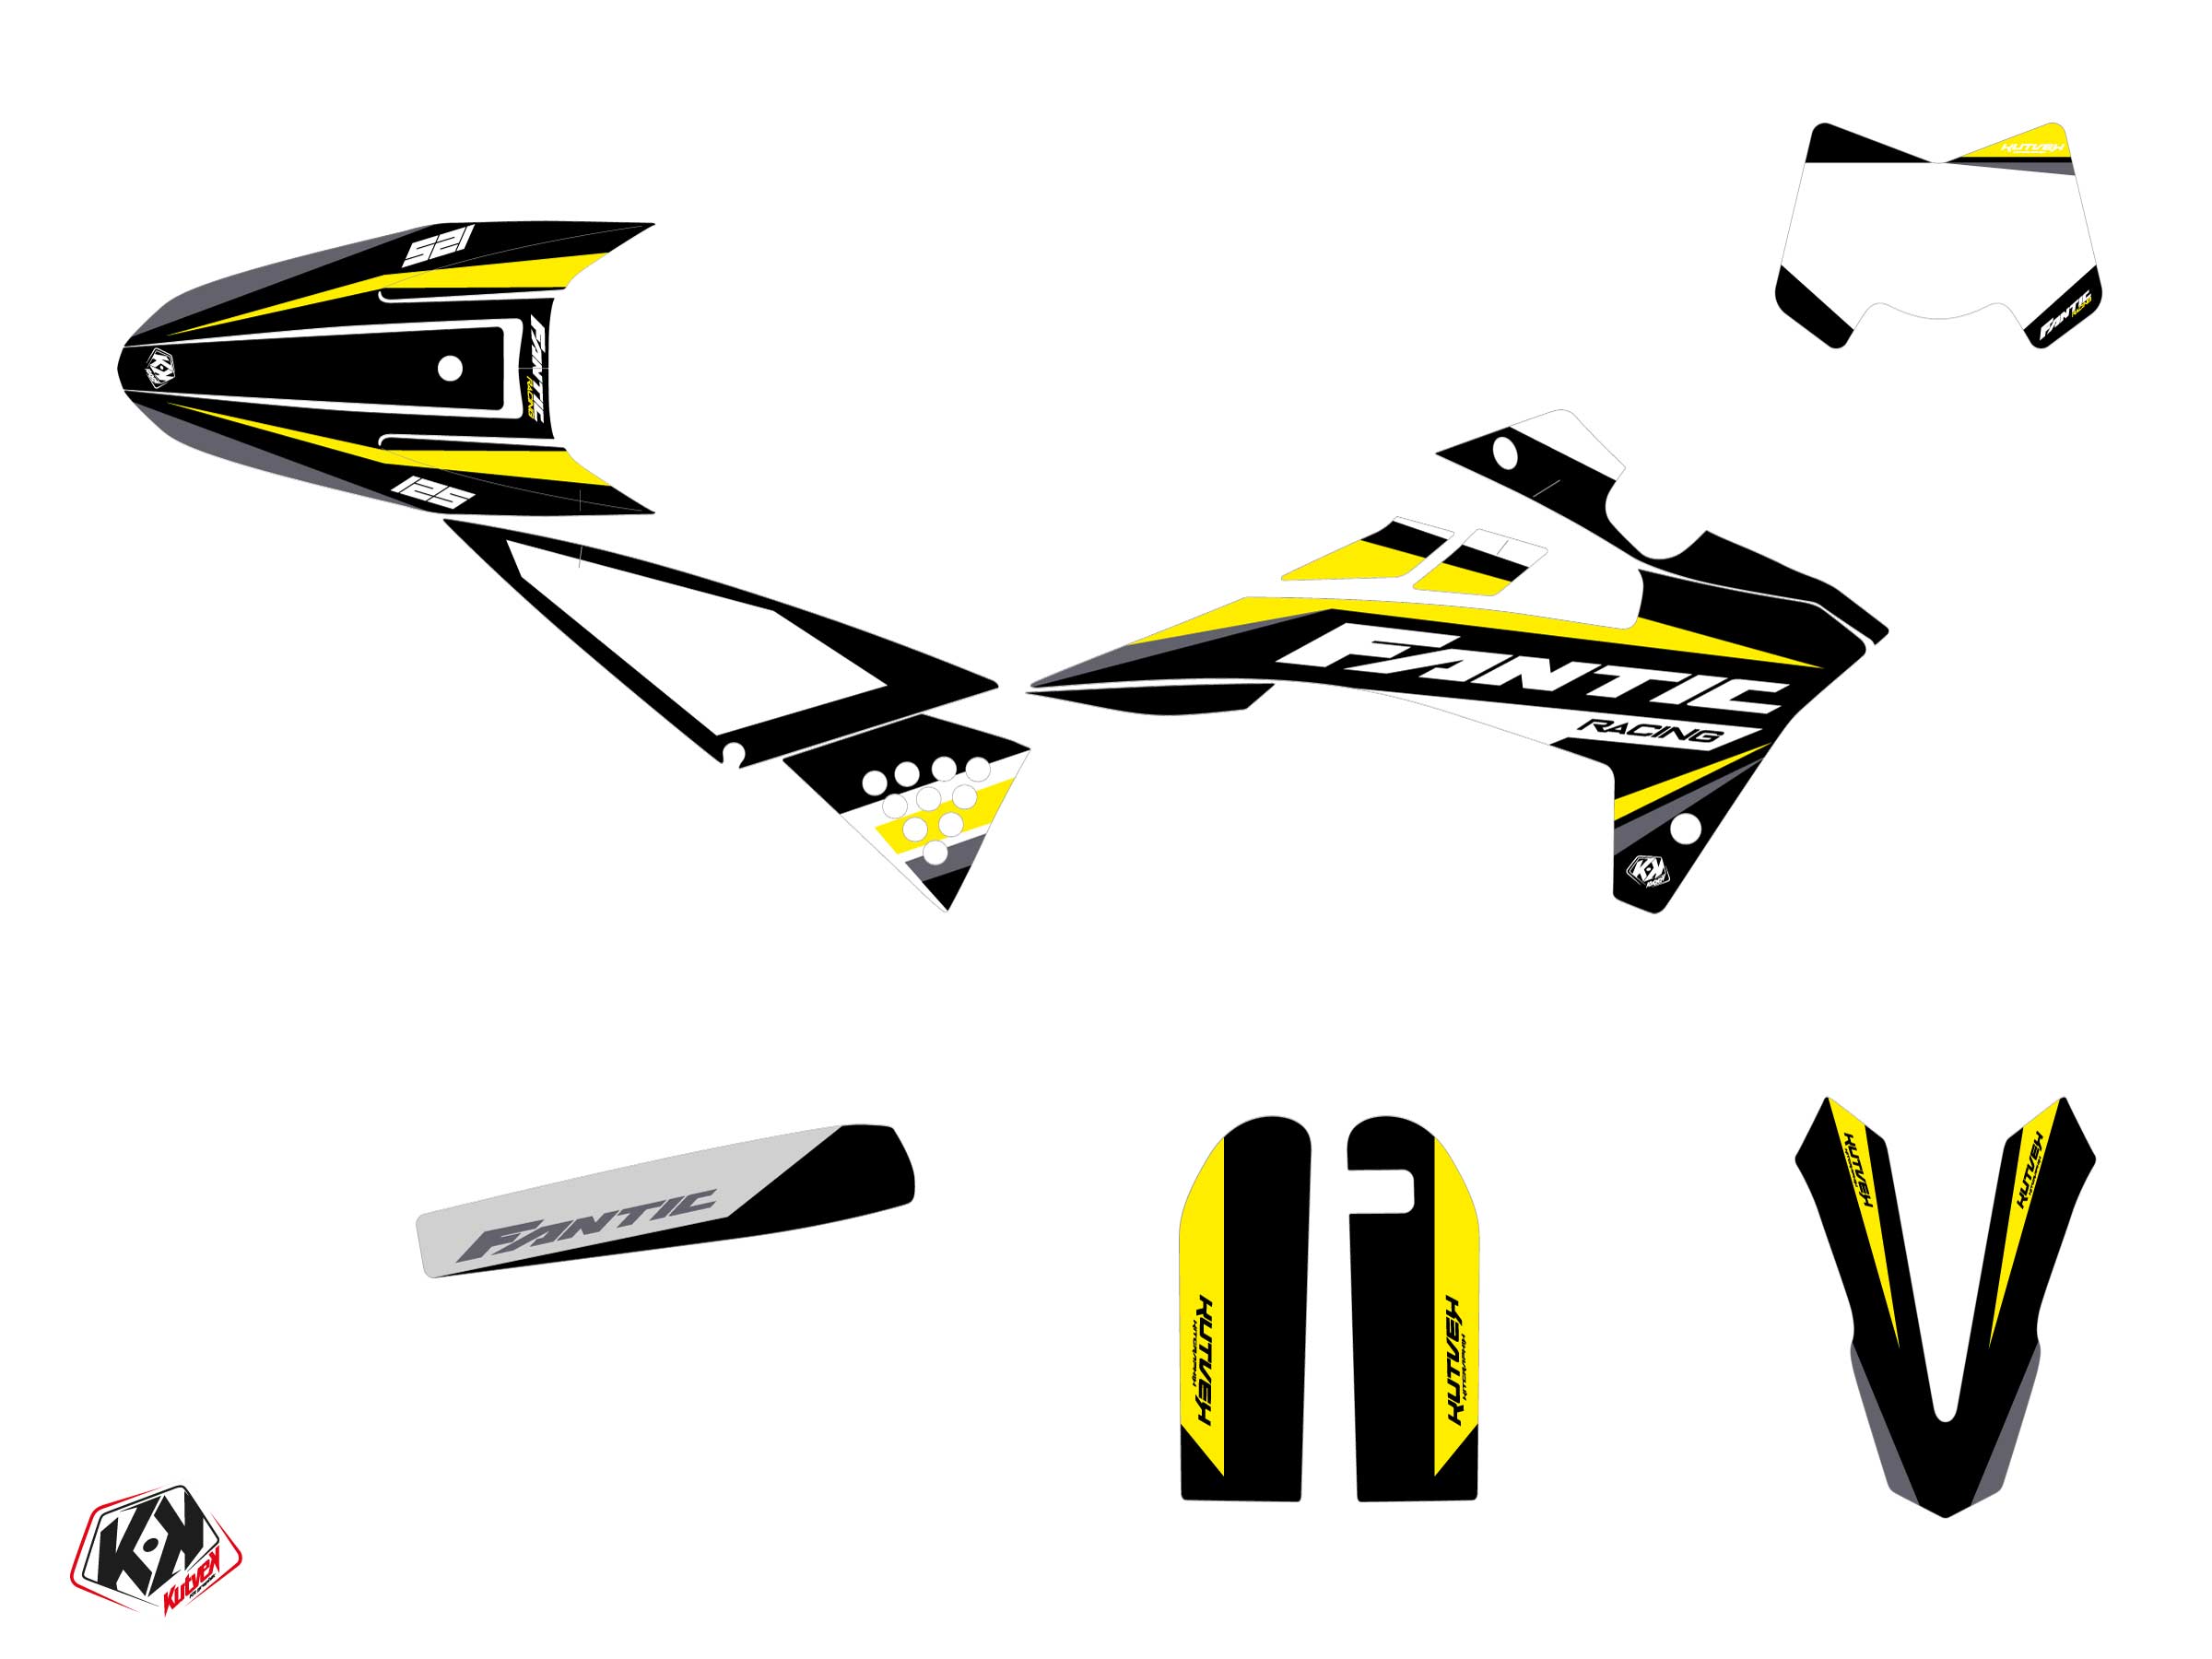 Fantic Xmf 125 Dirt Bike Inkline Graphic Kit Yellow